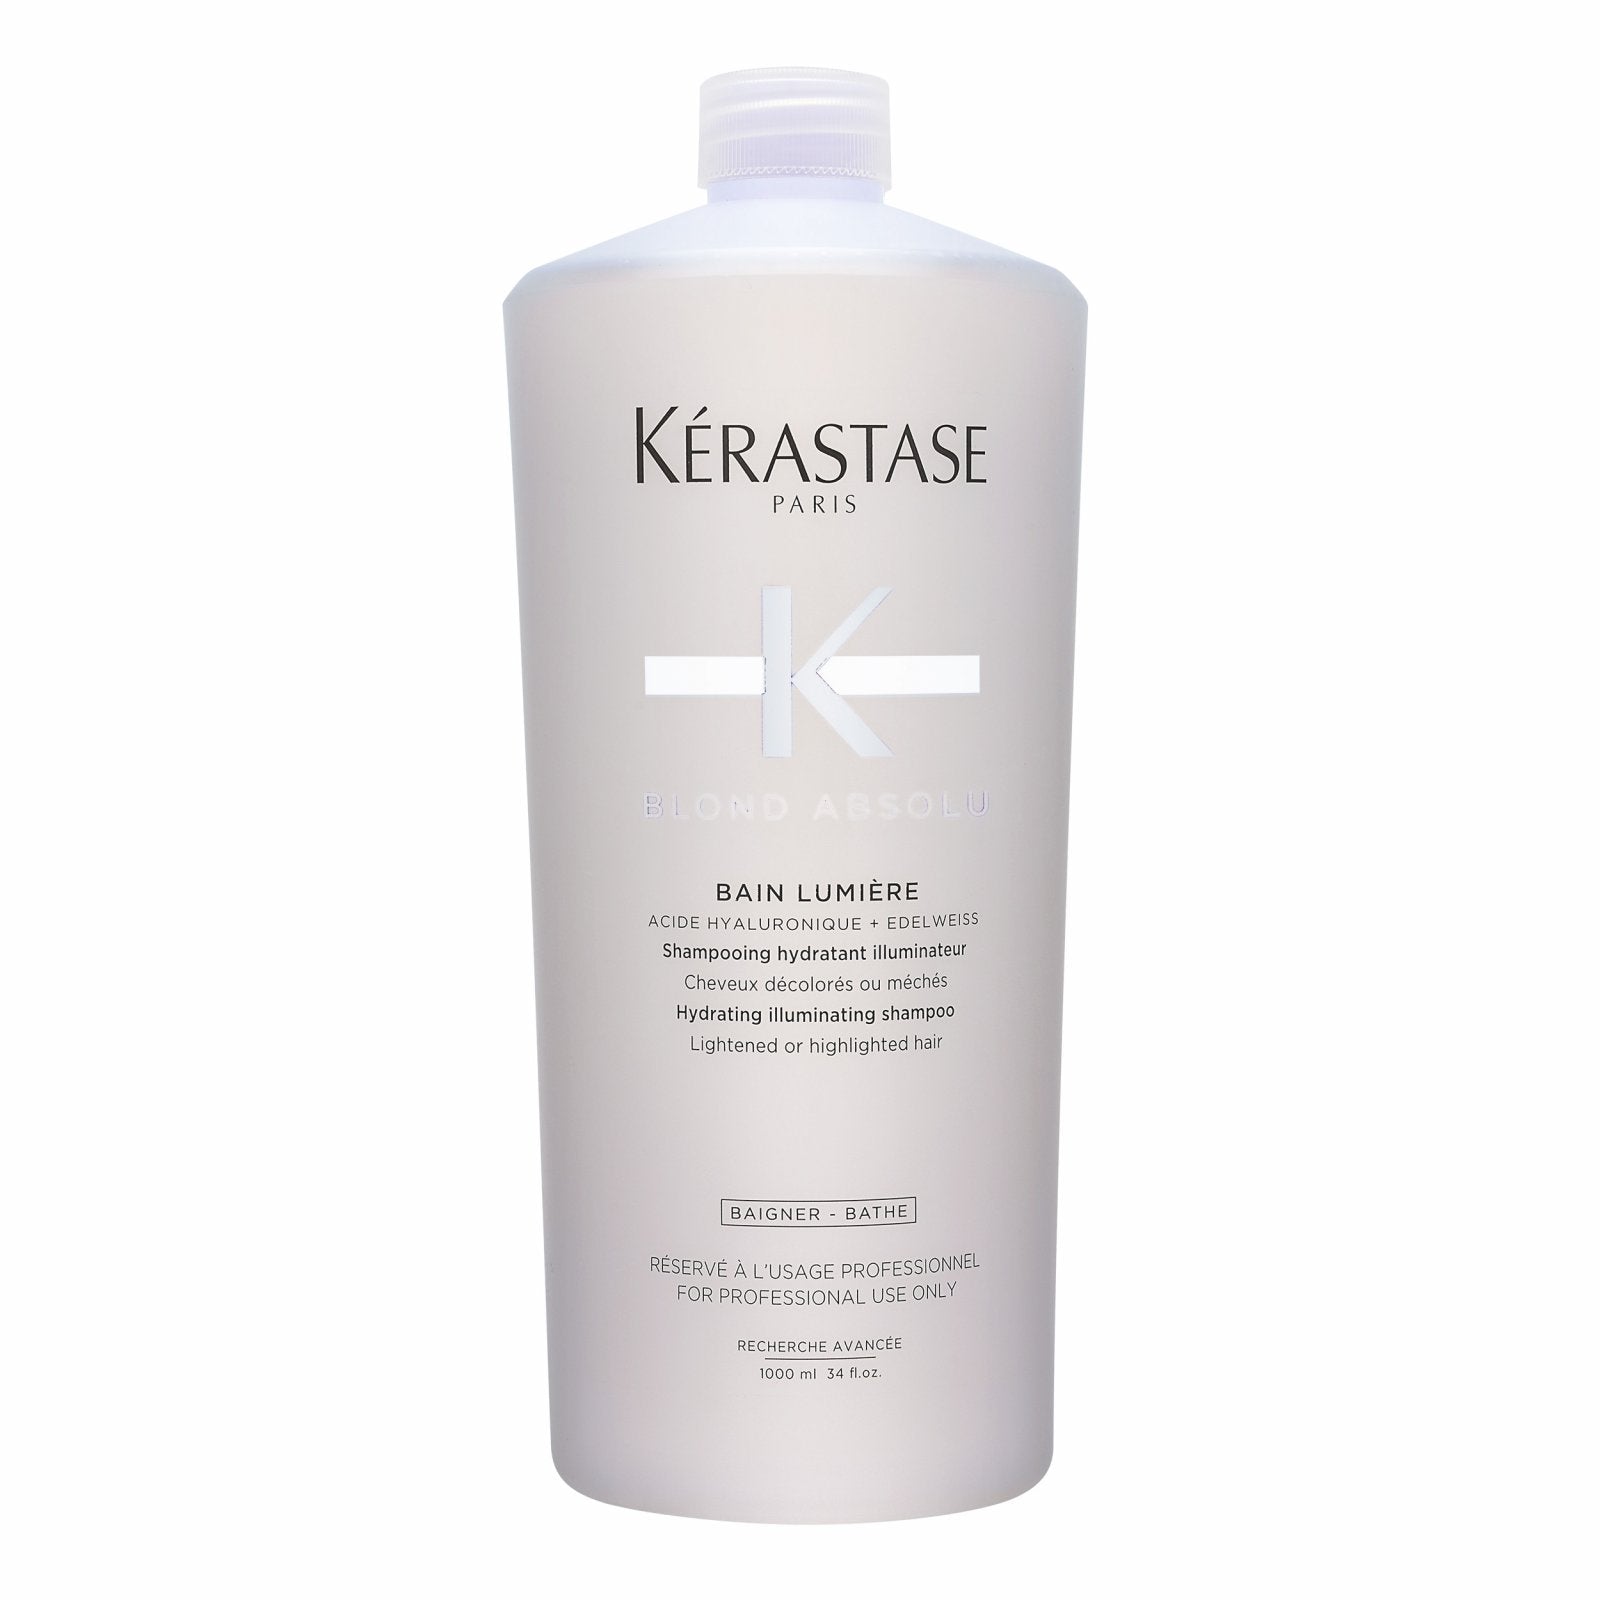 Kérastase | Blond Absolu Bain Lumiere Shampoo 1000ml